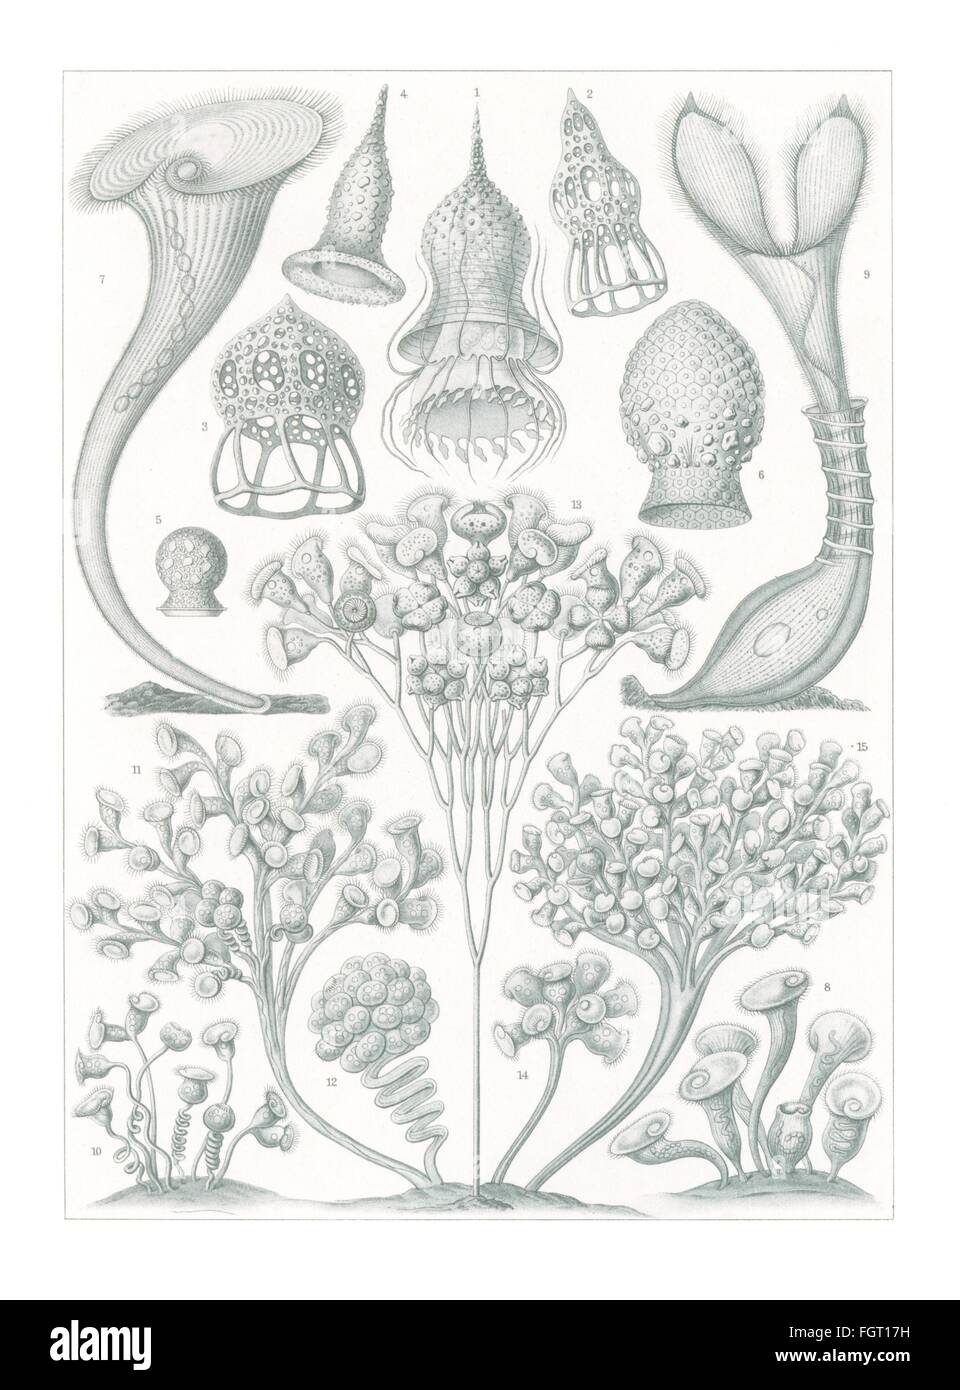 zoologie / Tiere, Ciliaten (Ciliata), Farblithographie, aus: Ernst Haeckel, 'Kunstformen der Natur', Leipzig - Wien, 1899 - 1904, Additional-Rights-Clearences-not available Stockfoto